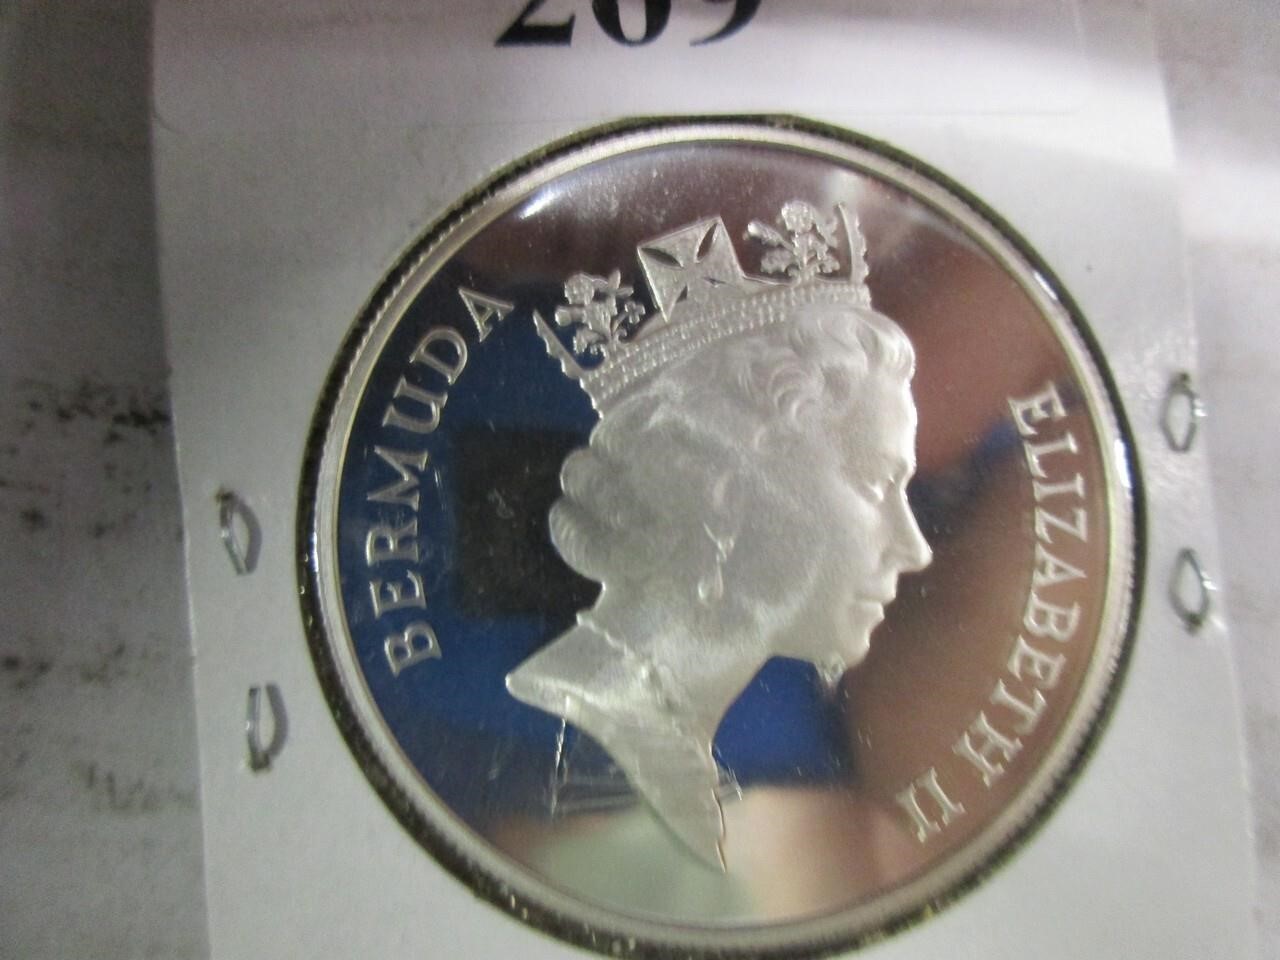 1985 Bermuda .925 silver dollar